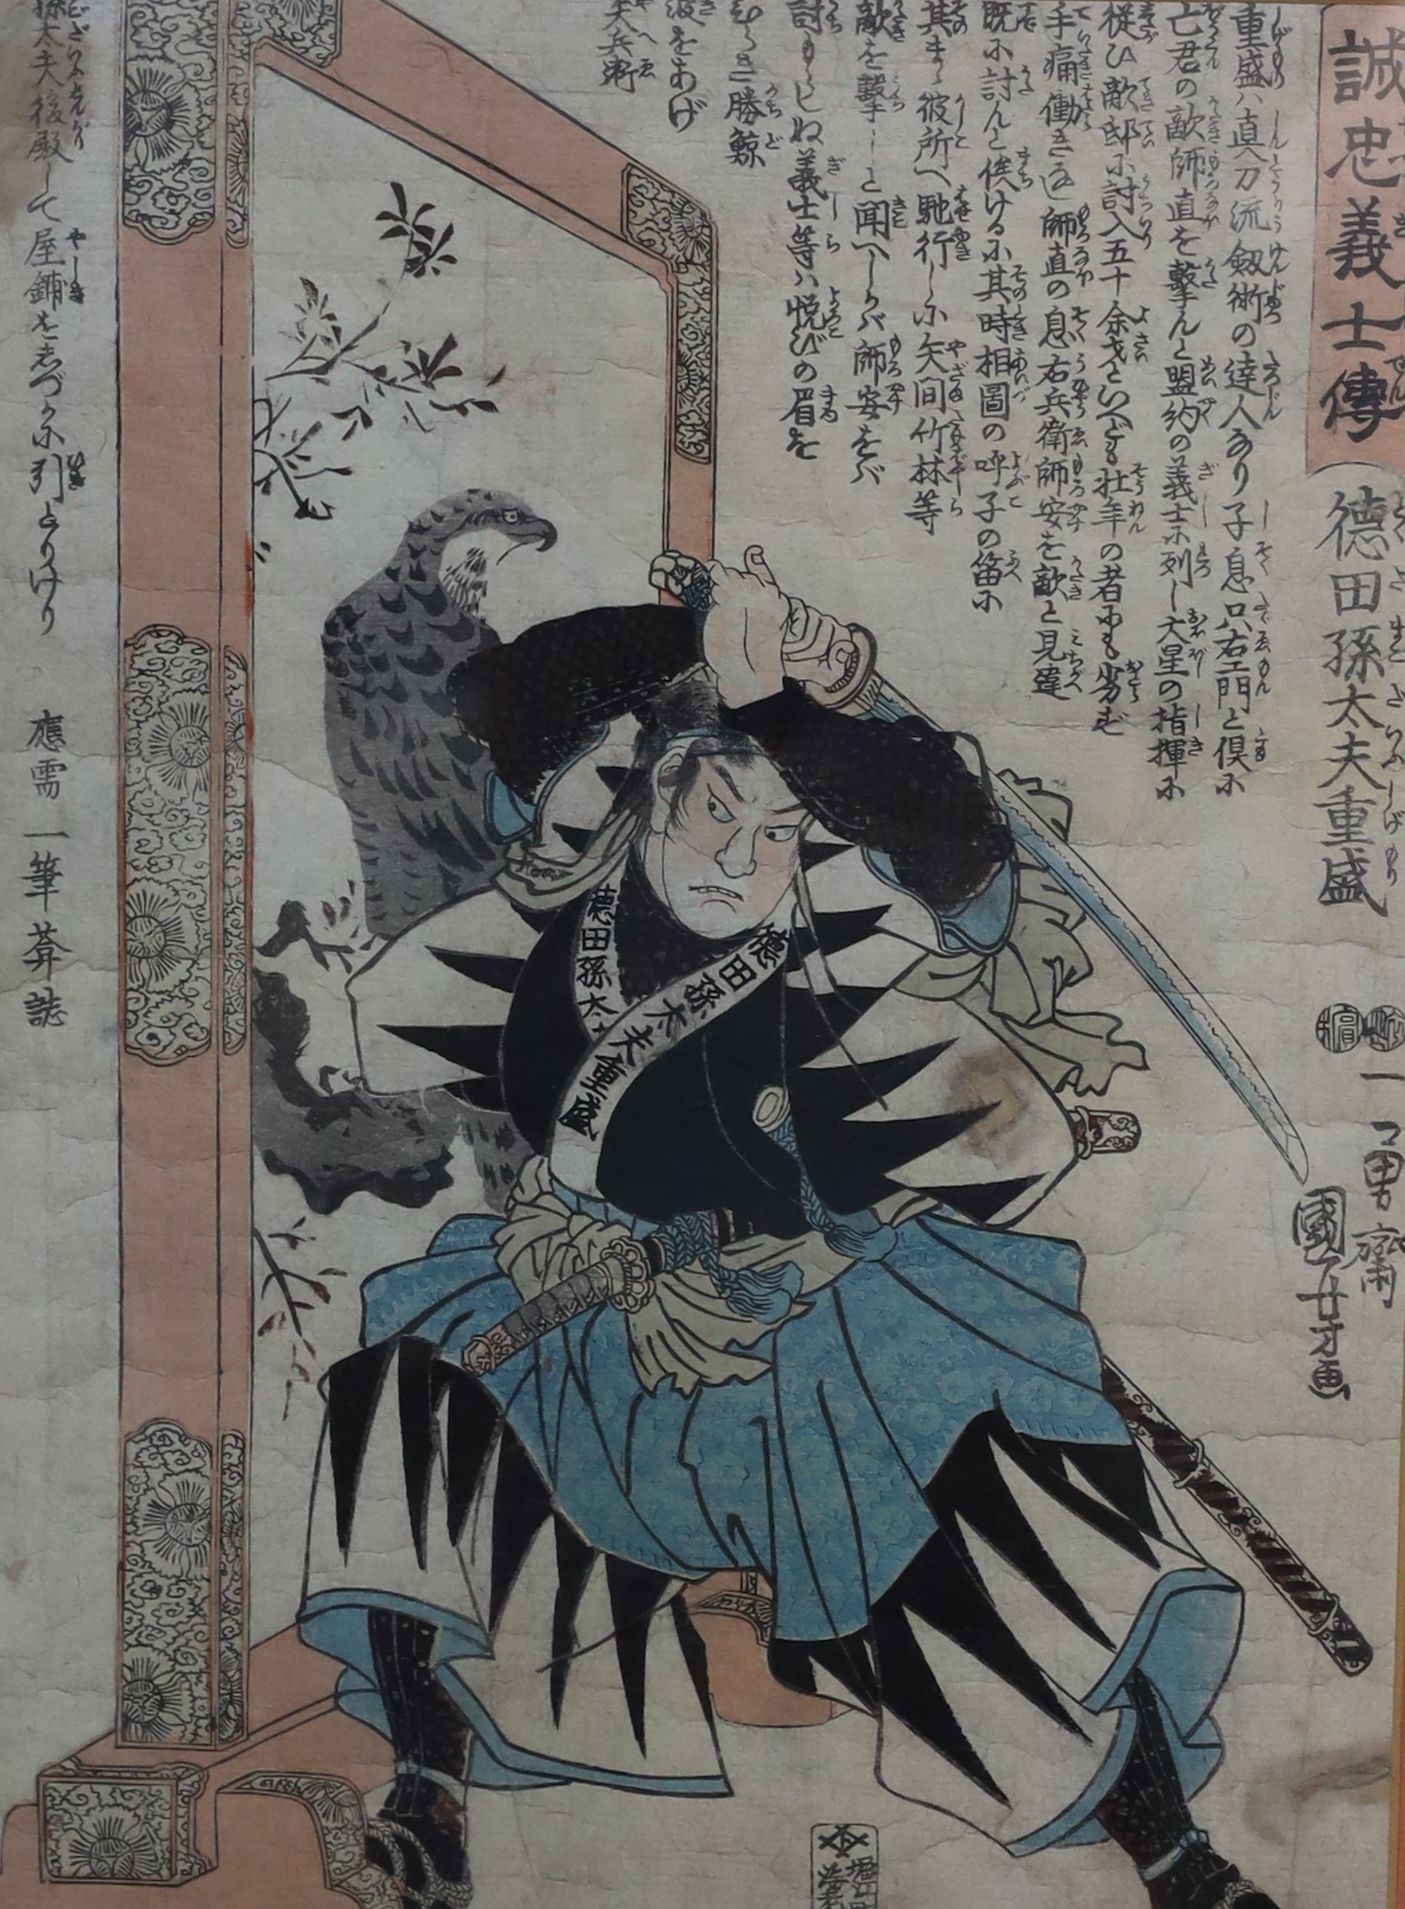 Utagawa Kuniyoshi (1797-1861) eight woodblock prints (yukiyo-e), from the series Faithful Samurai (Seichu gishi den), the story of the 47 Ronin, each 33 x 24cm, framed and glazed, staining